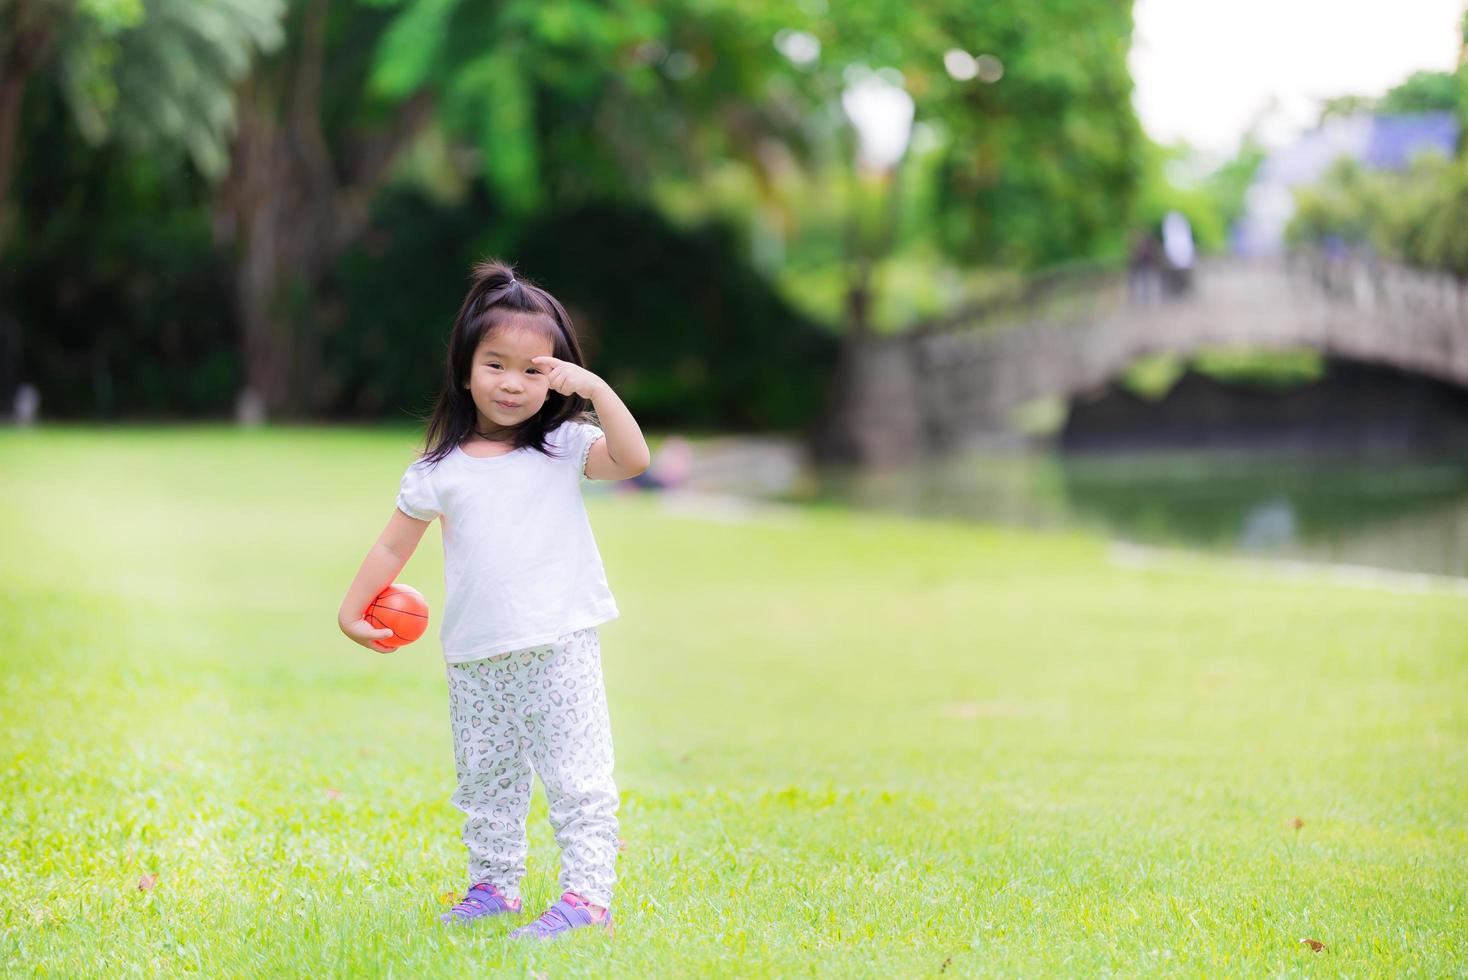 gelukkig meisje kleine oranje bal spelen in groen gras met familie. picknick met ouders op vakantie. winter in centraal thailand. fris weer. schattig 3-jarig kind, lieve glimlach, kind dat wenkbrauwen krabt foto